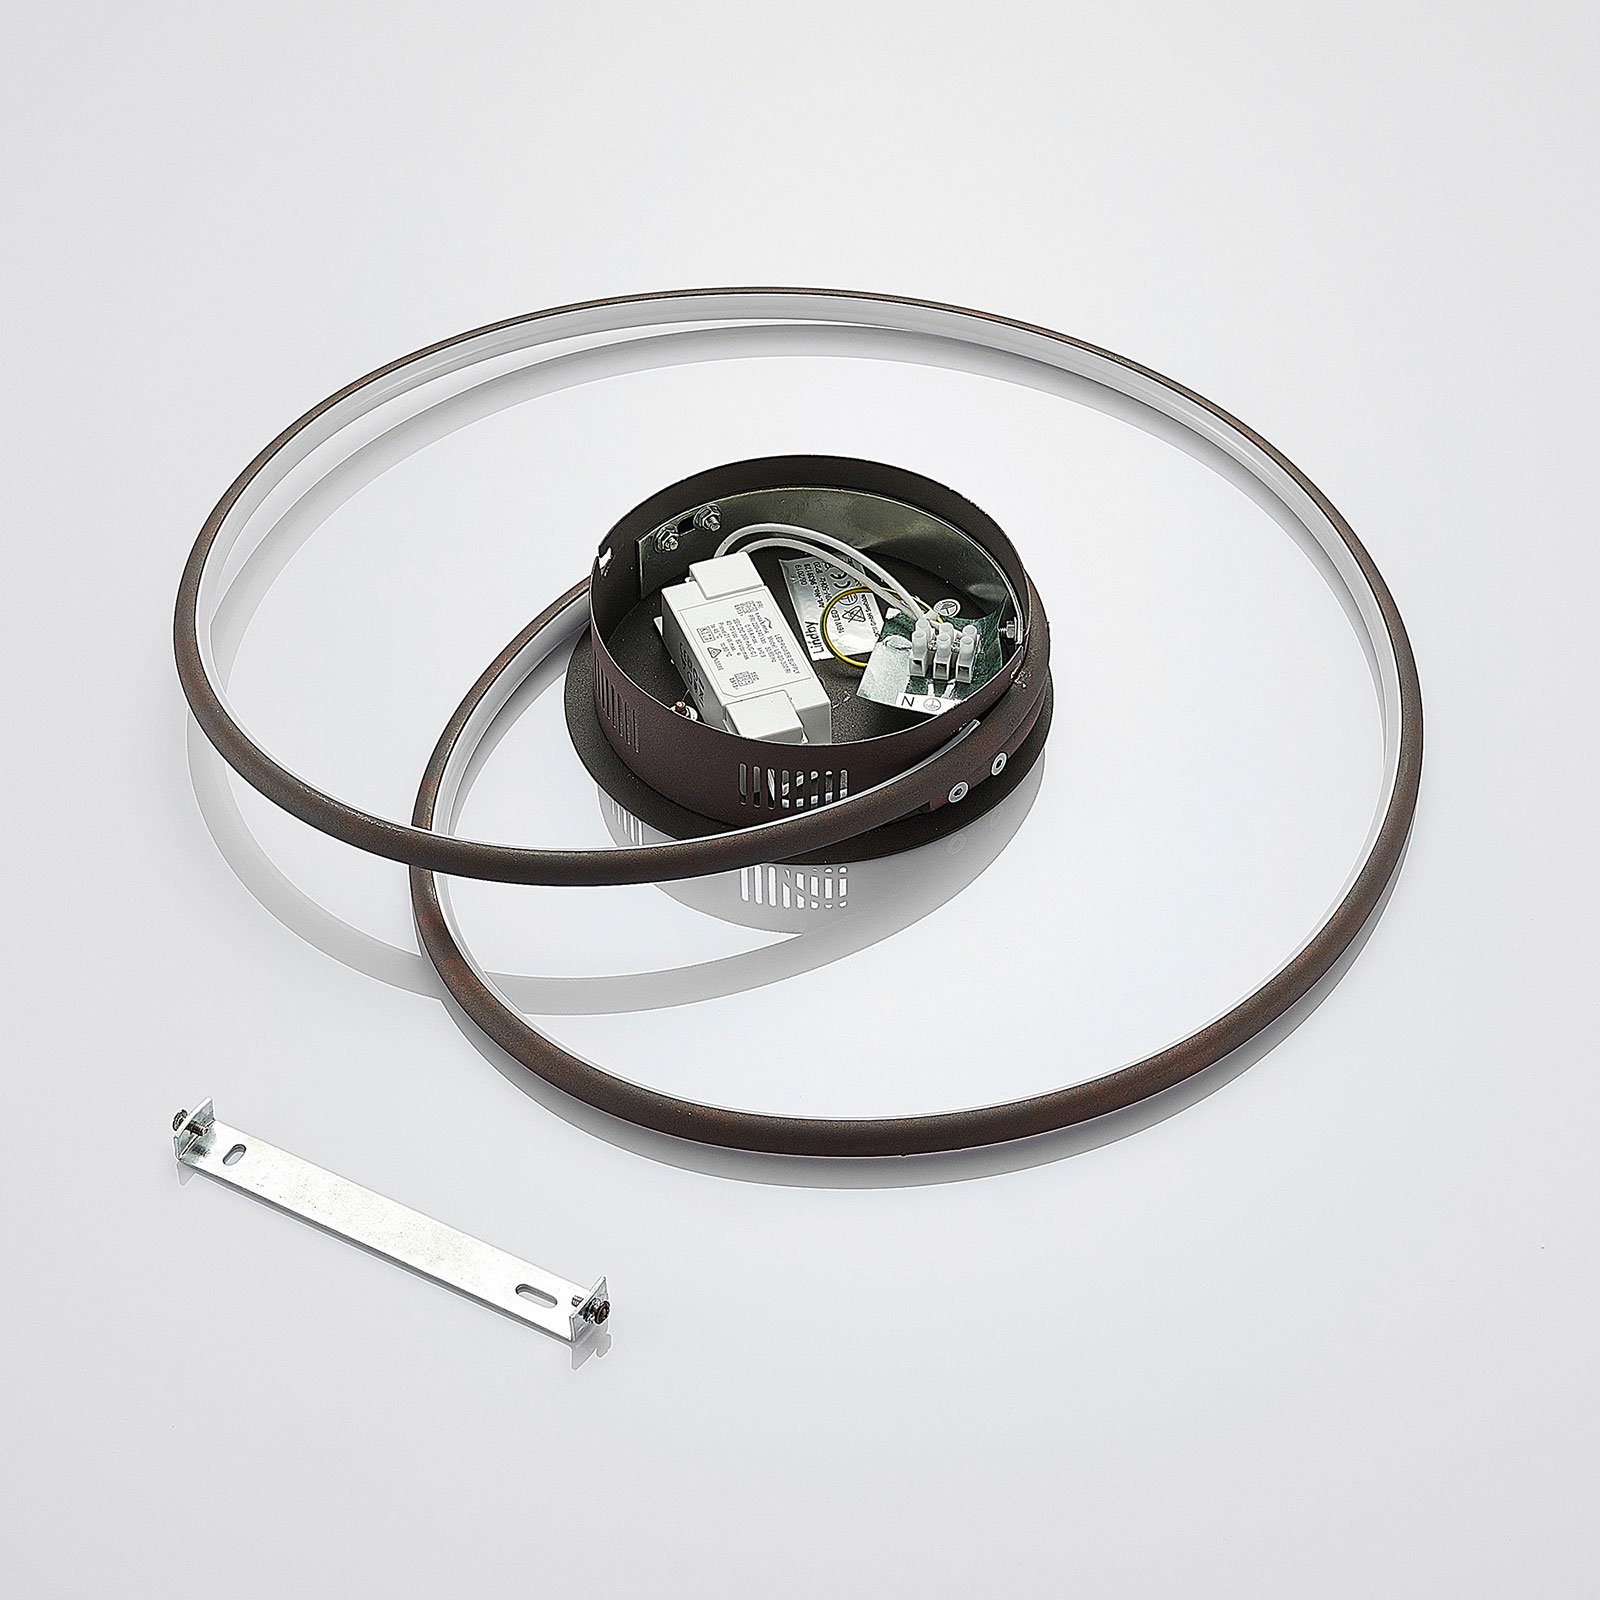 Lindby Joline LED-taklampe, rust, 45 cm